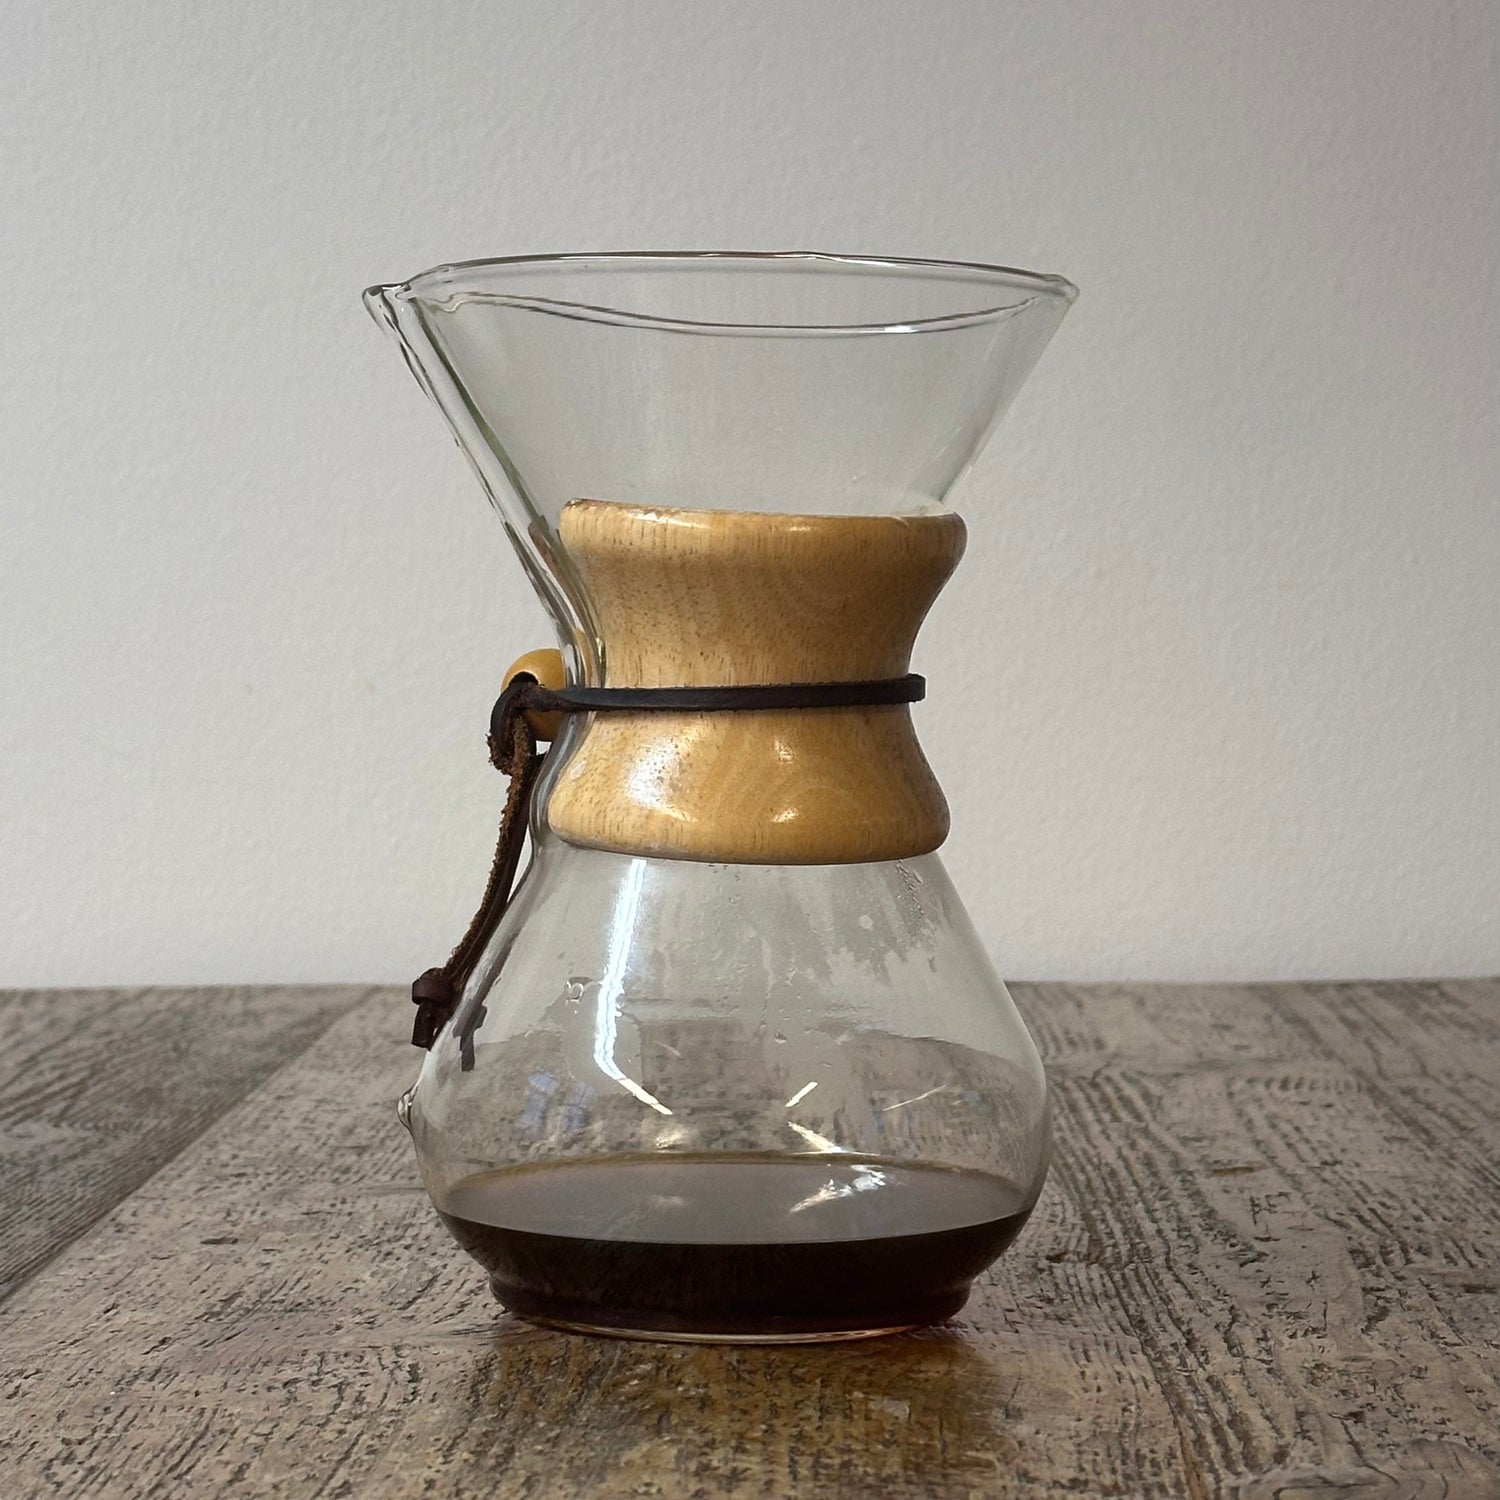 Coffee Filter Brewing Method